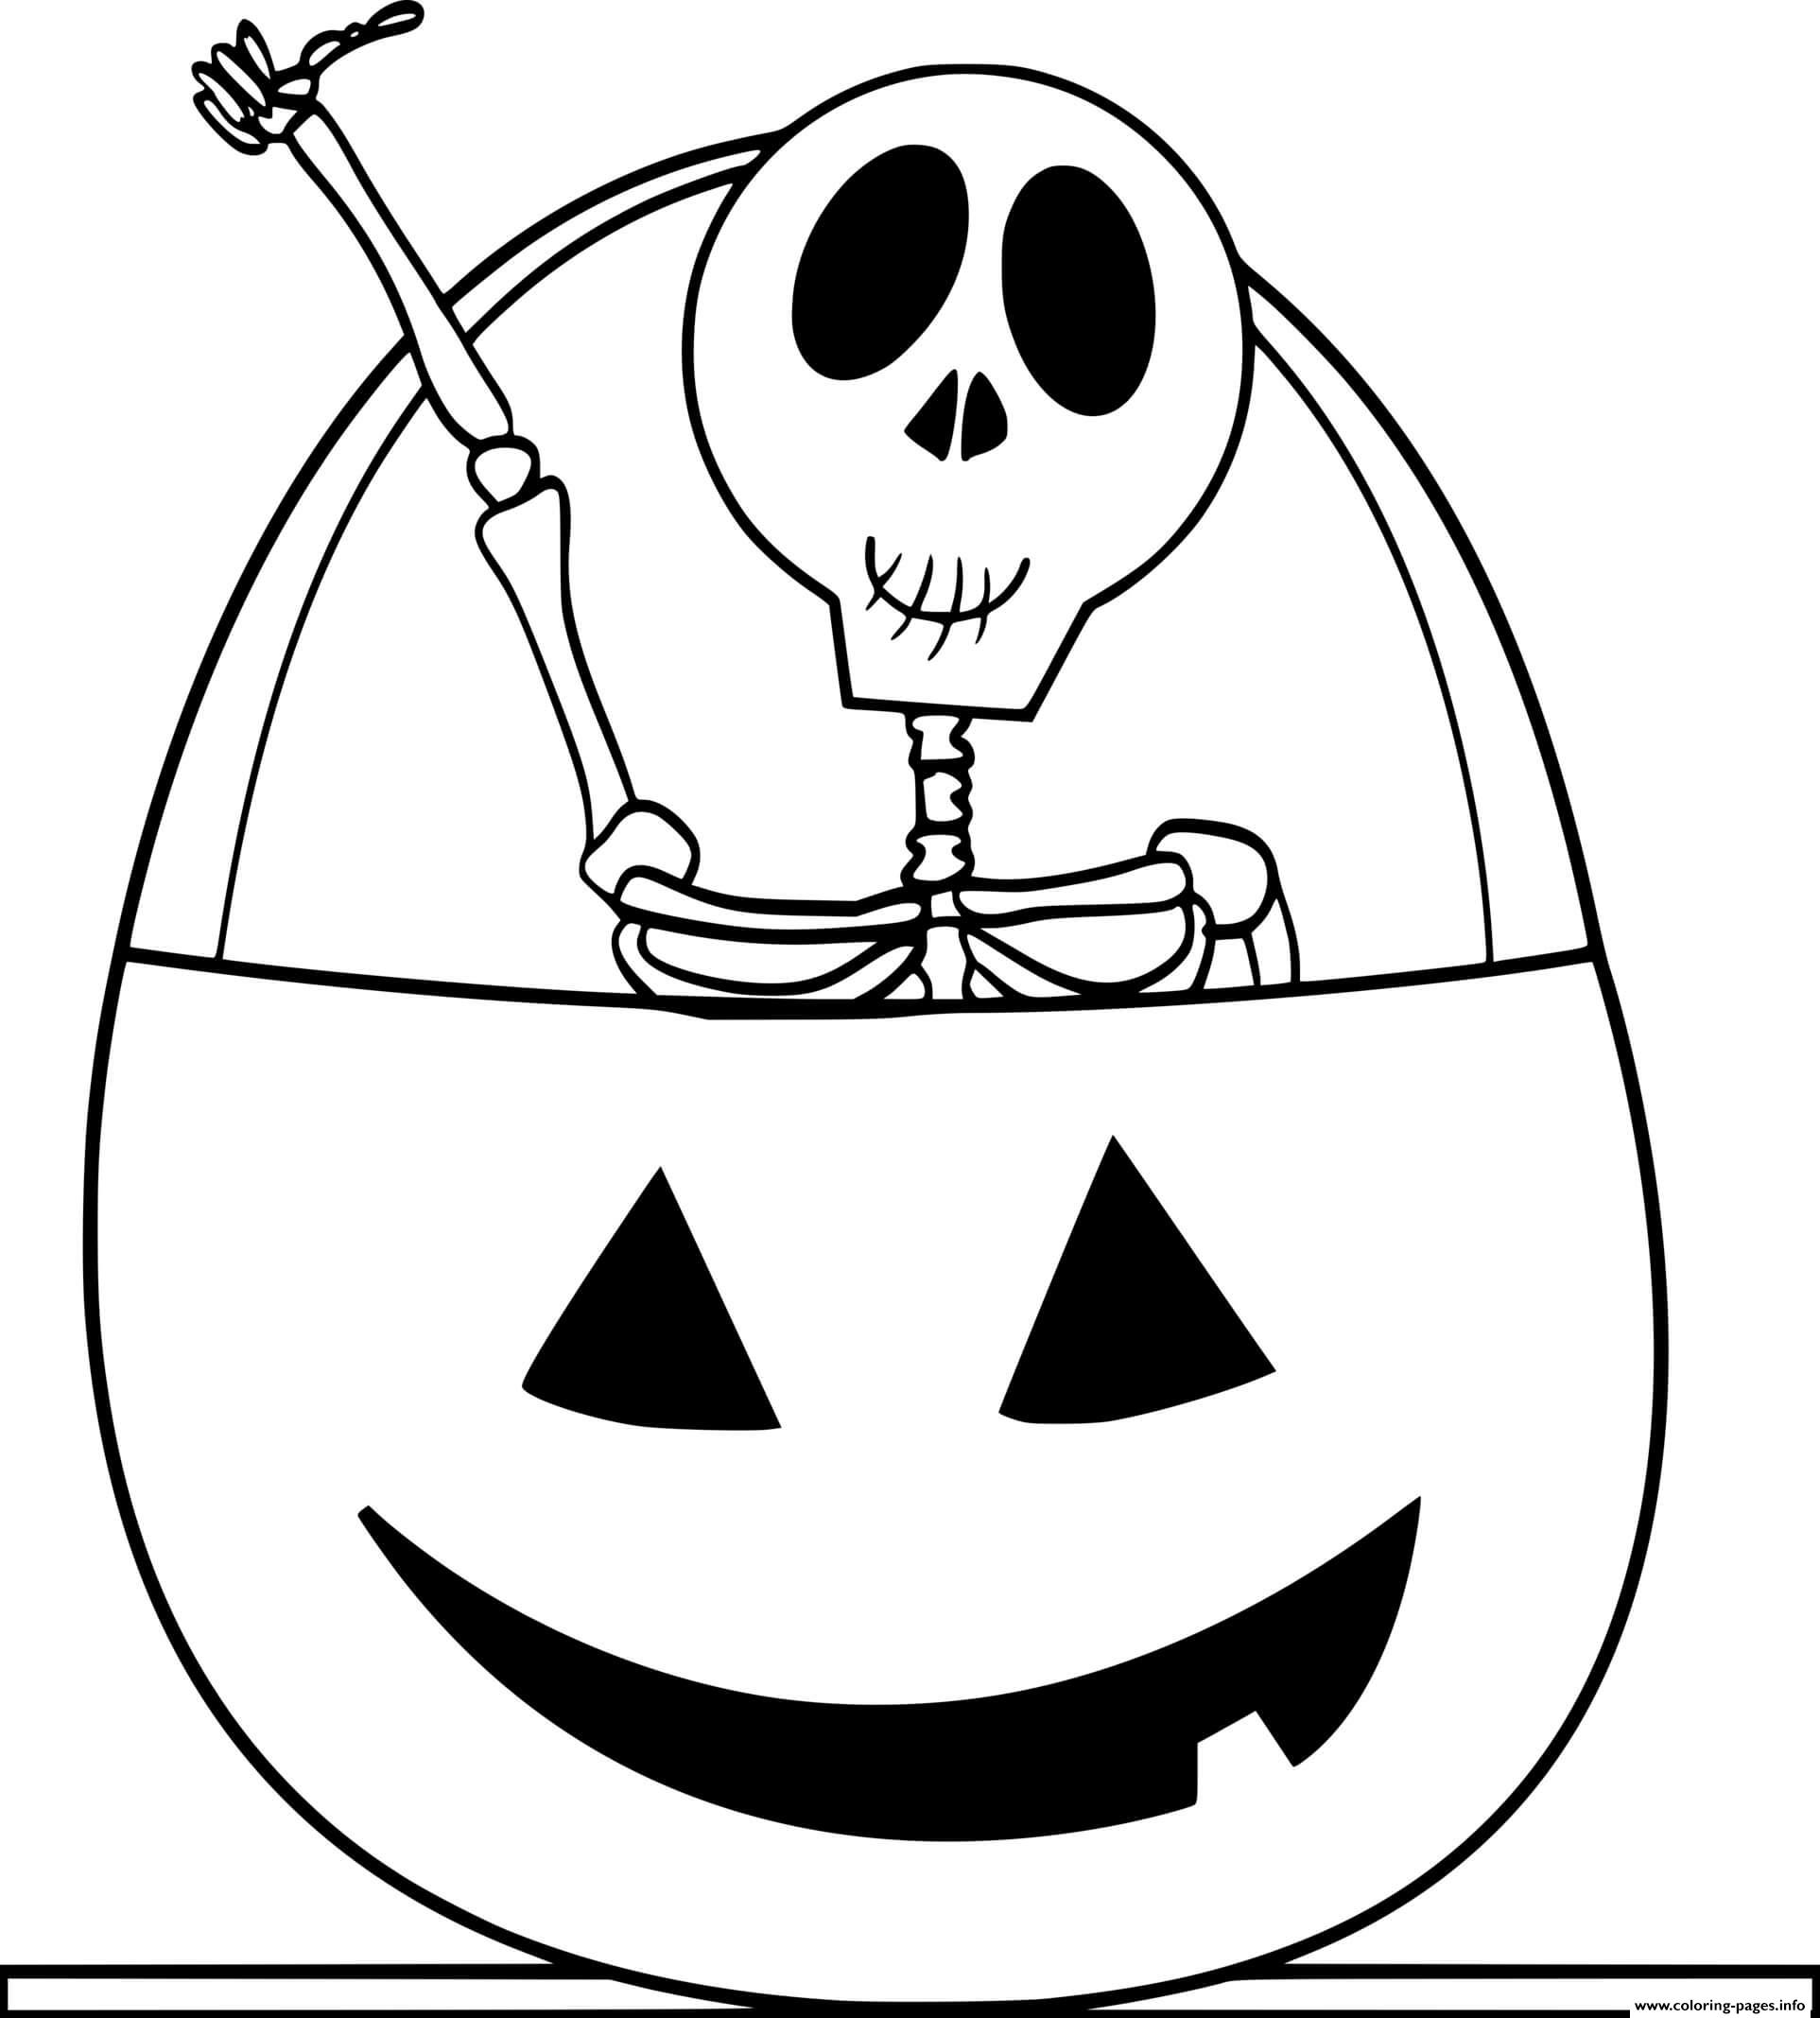 Skeleton In Pumpkin Basket coloring